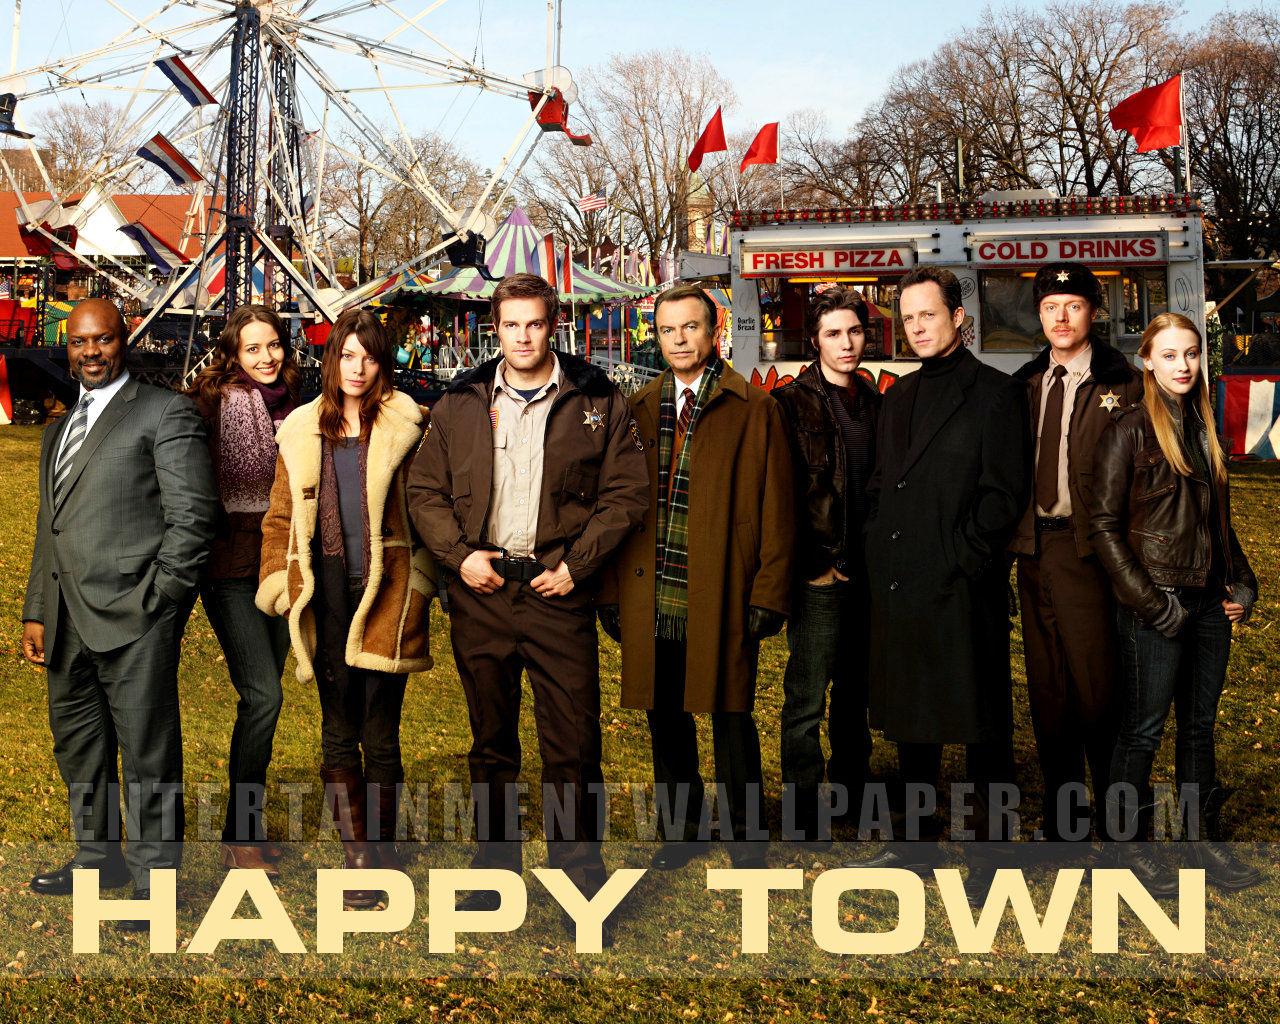 http://www.entertainmentwallpaper.com/images/desktops/movie/tv_happy_town01.jpg